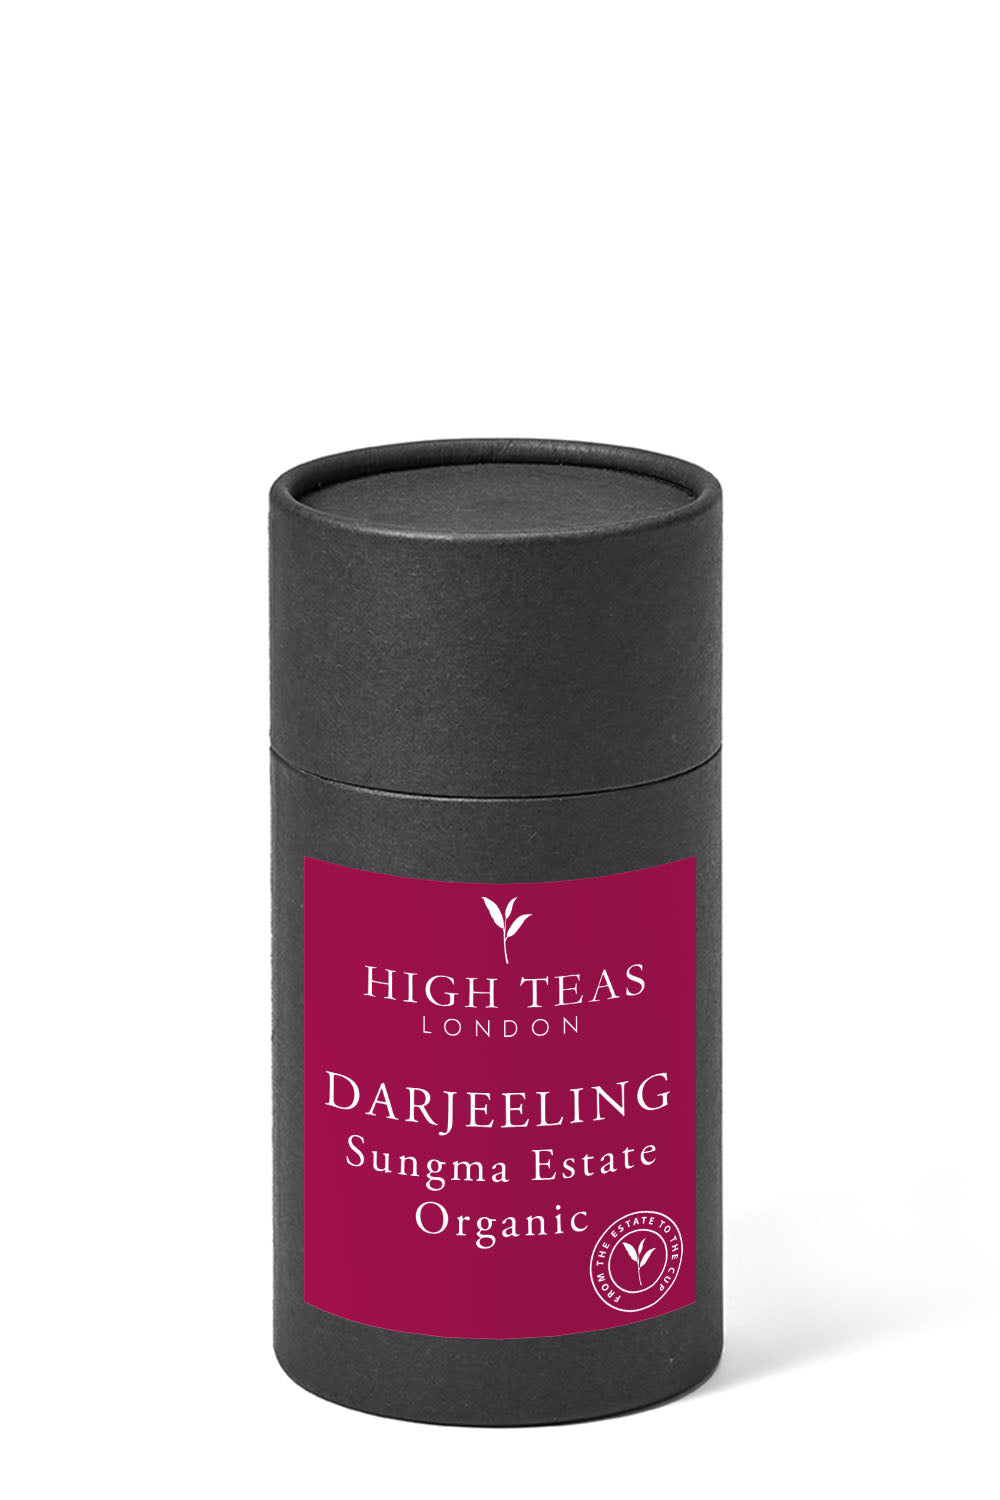 Darjeeling BPS Sungma Estate Organic-60g gift-Loose Leaf Tea-High Teas